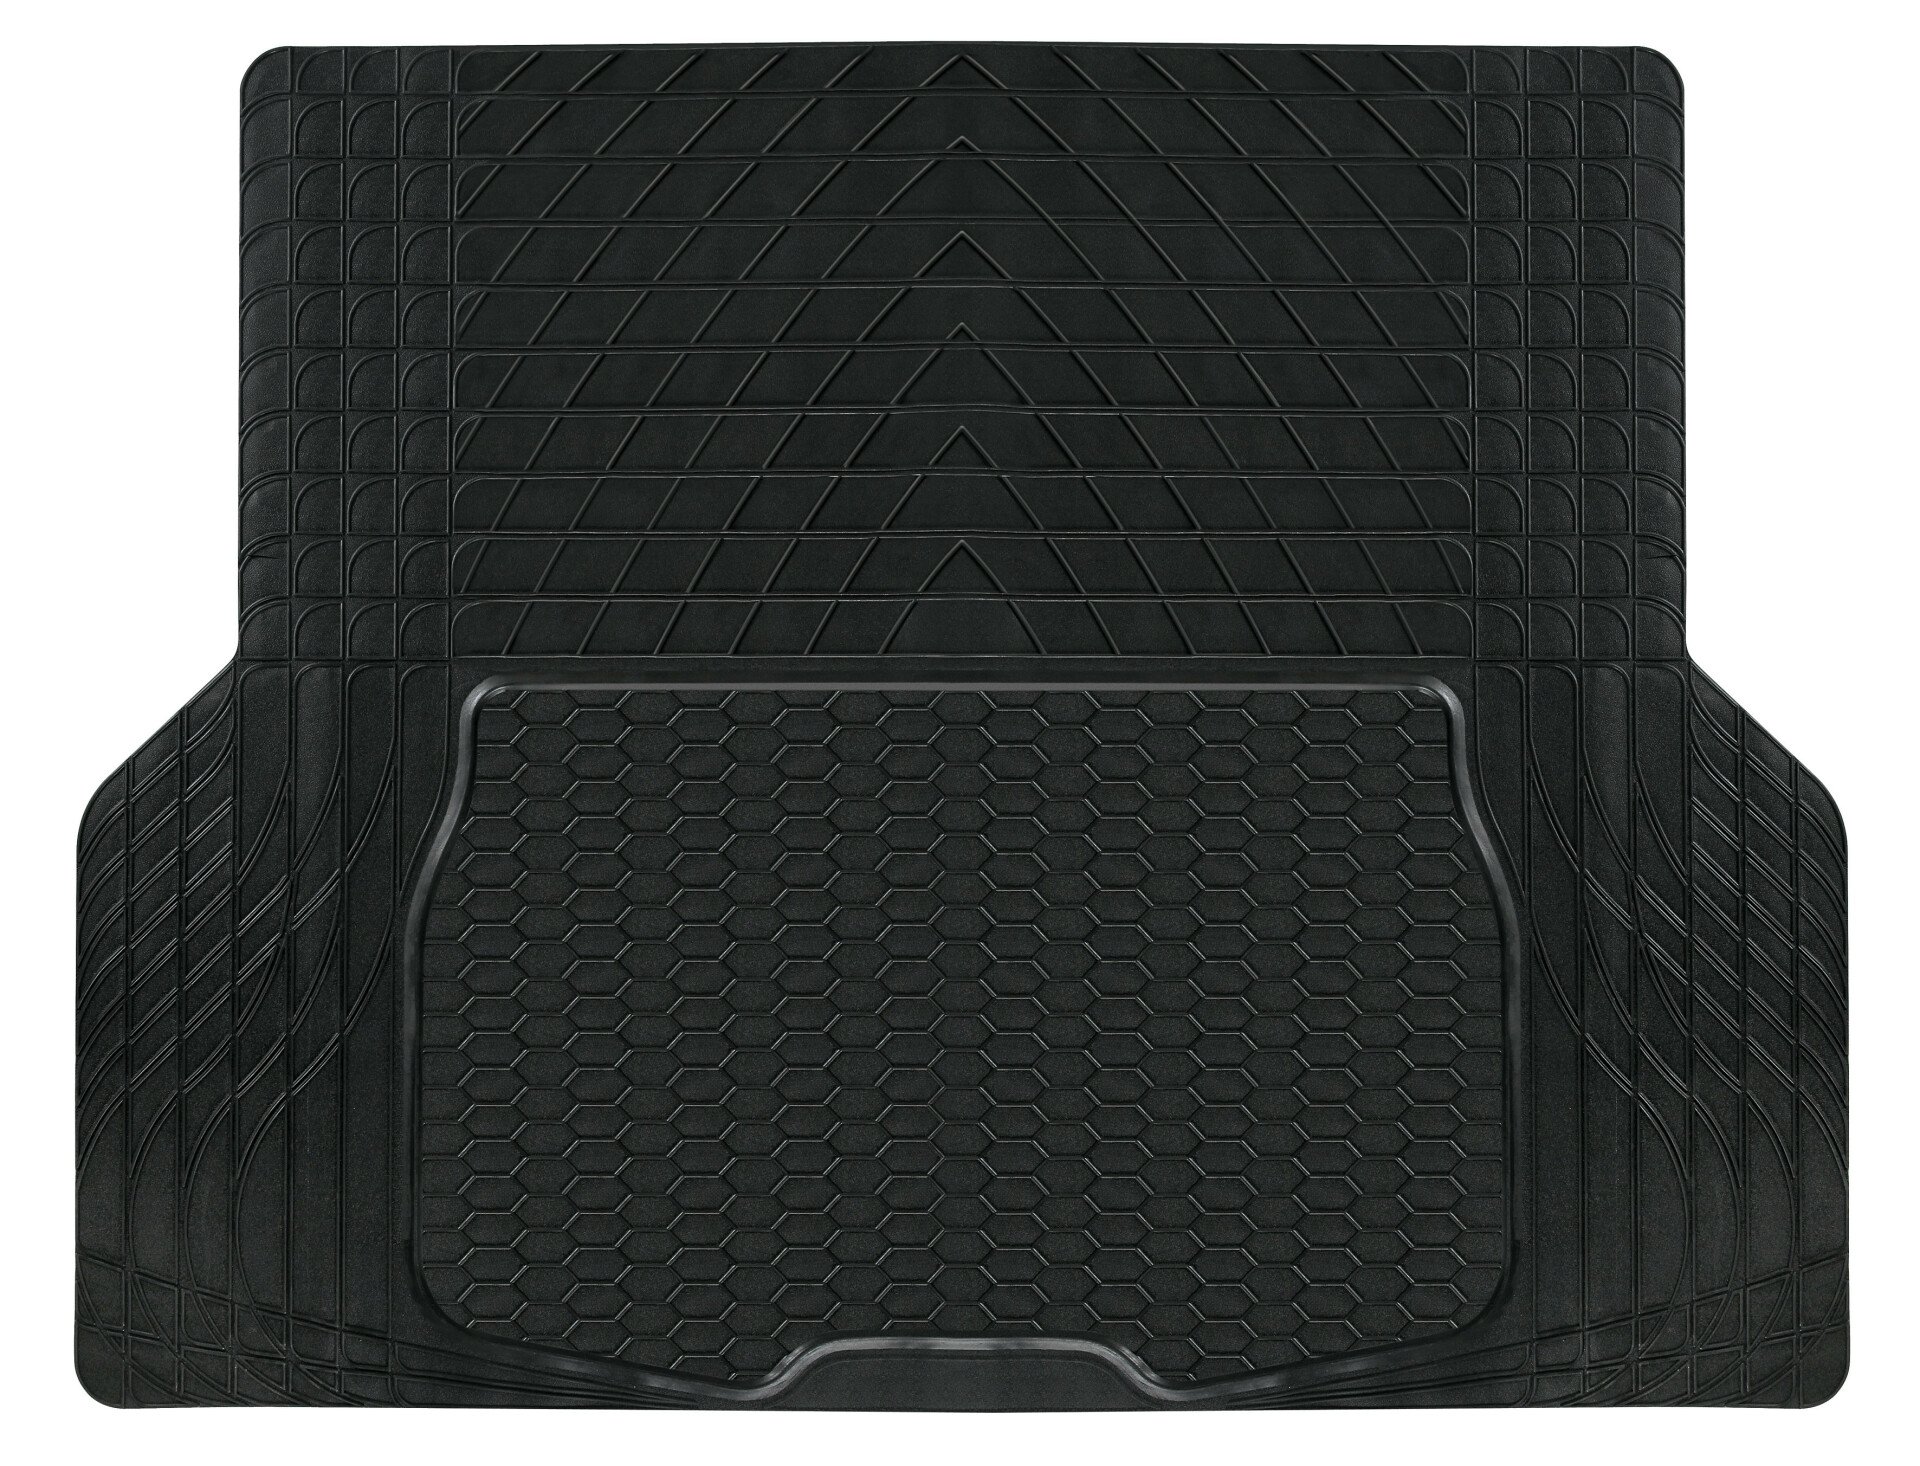 Tavita portbagaj PVC Slim Protection - 140x108cm thumb